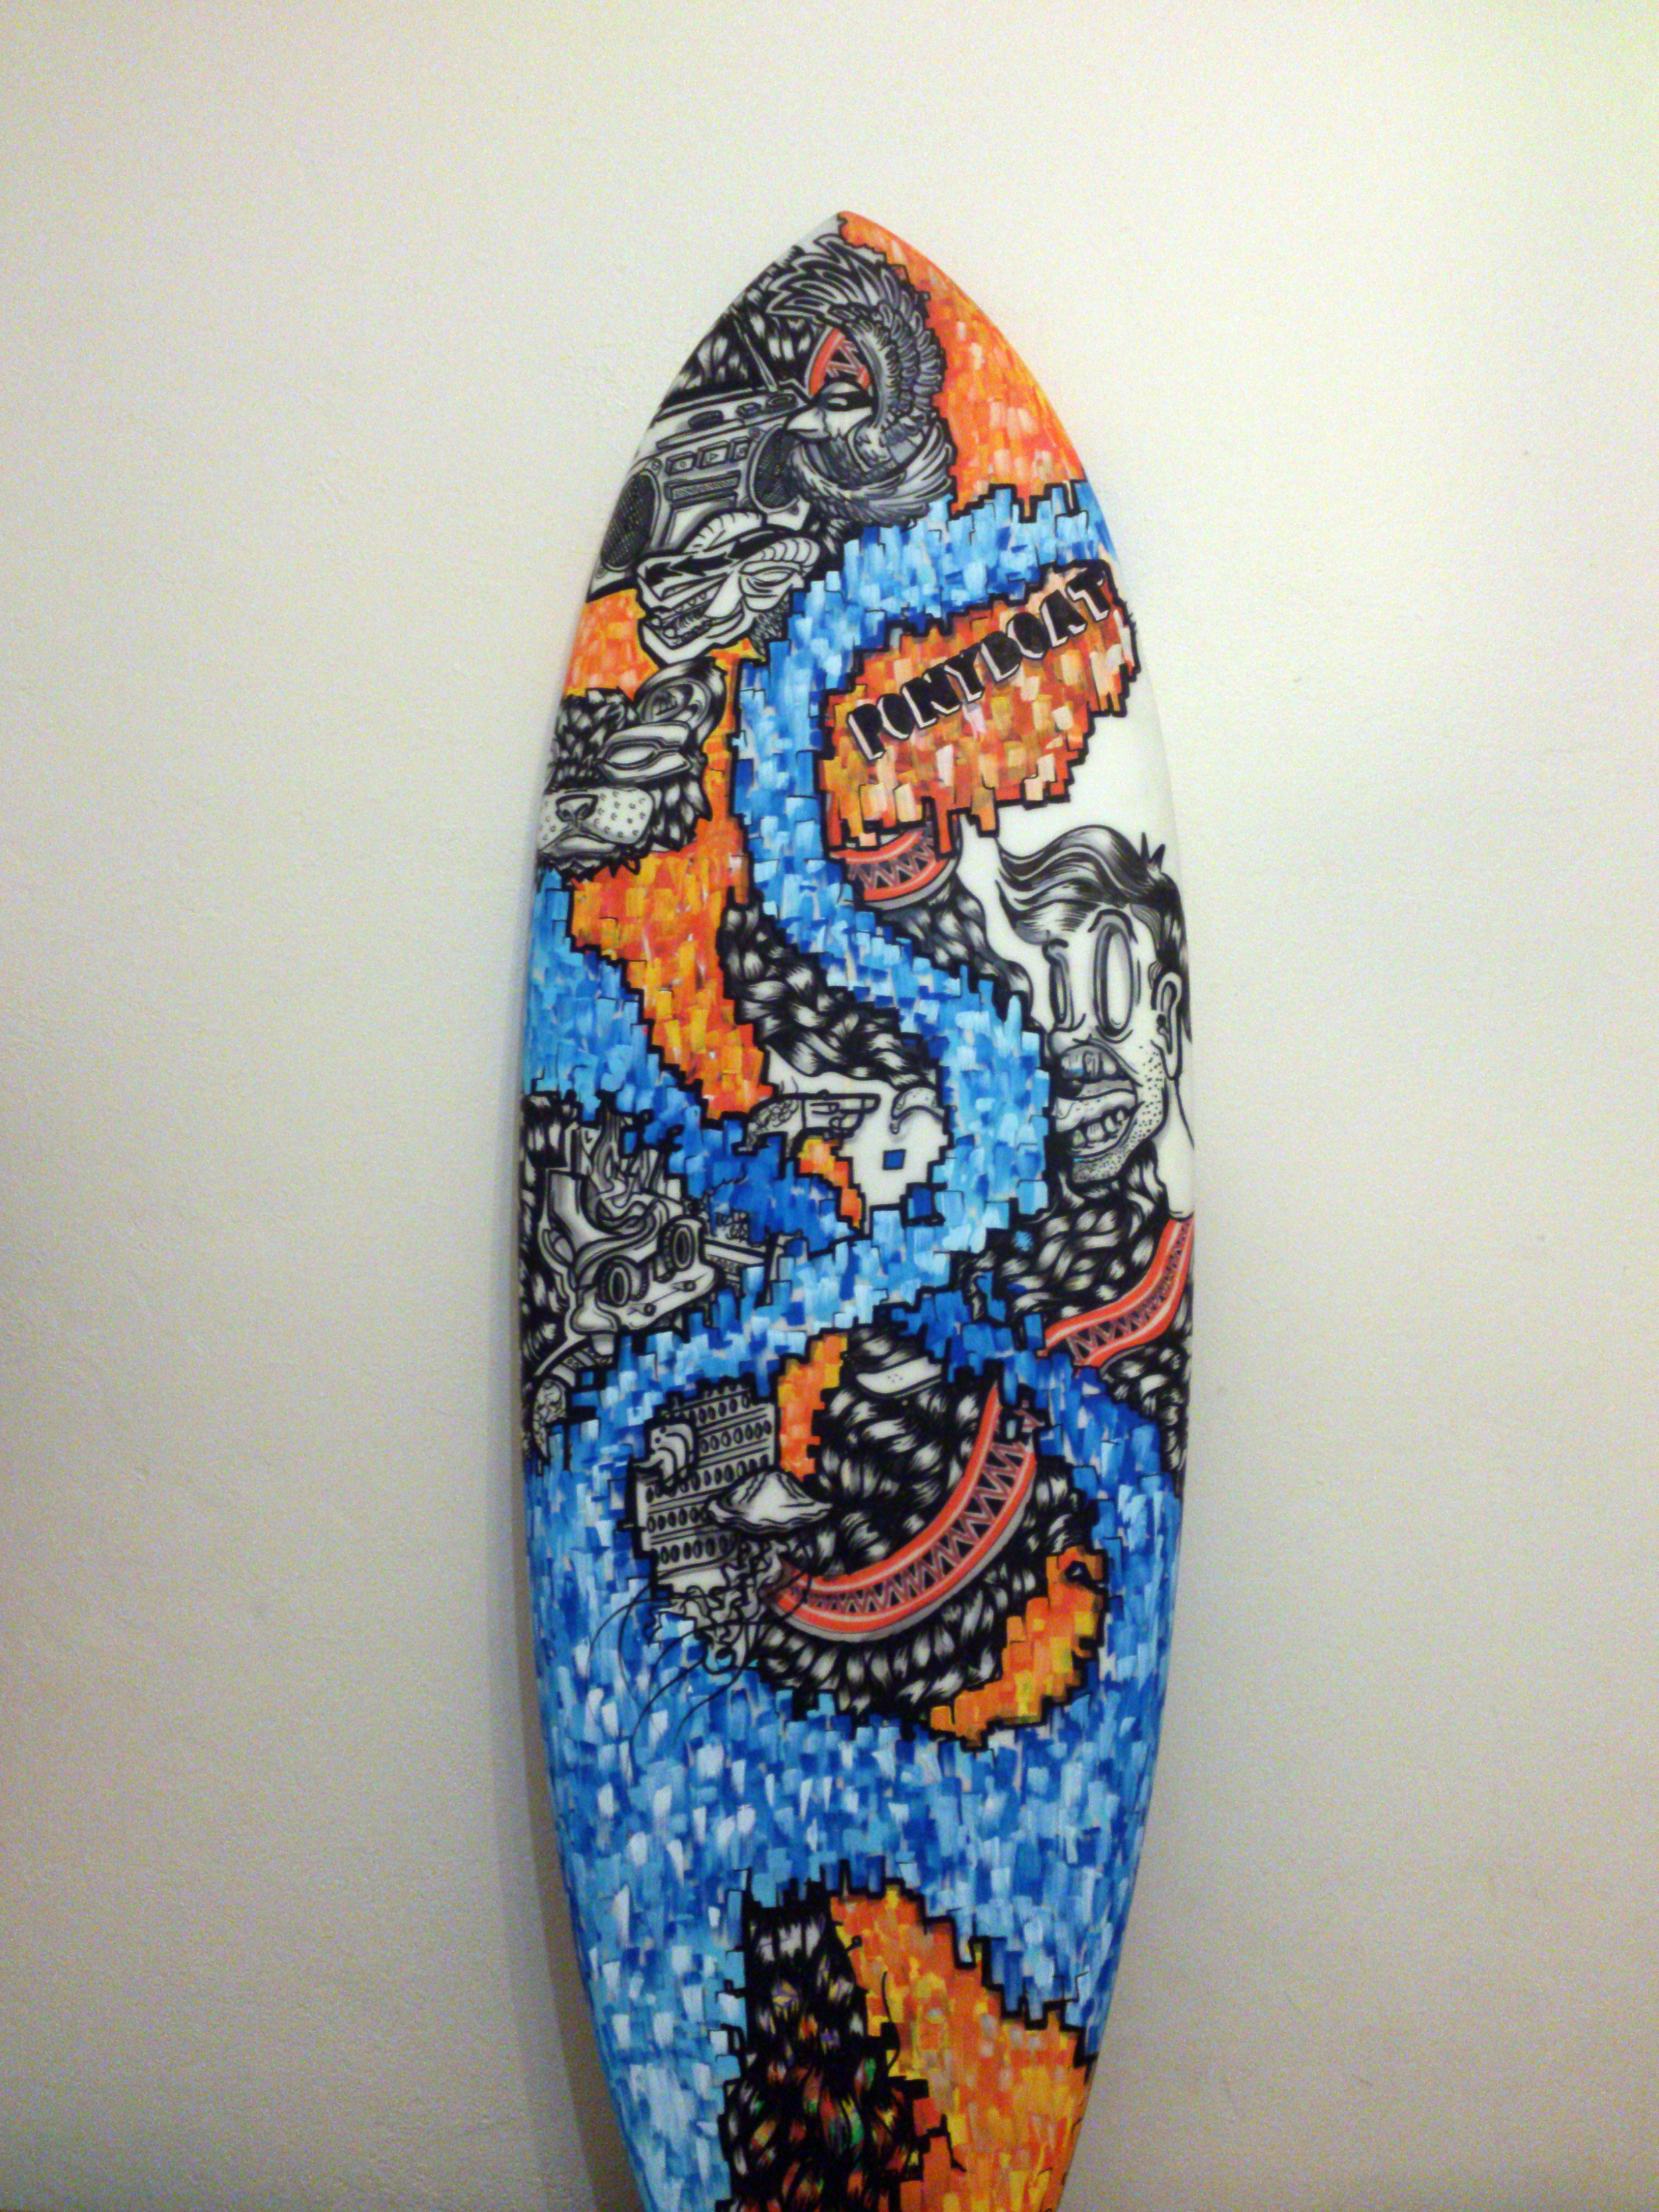 surfboard-surfing-surf-sam-shennan-custom-ud3-handmade-hand-painted-posca-design-sydney-artist-illustrator.jpg